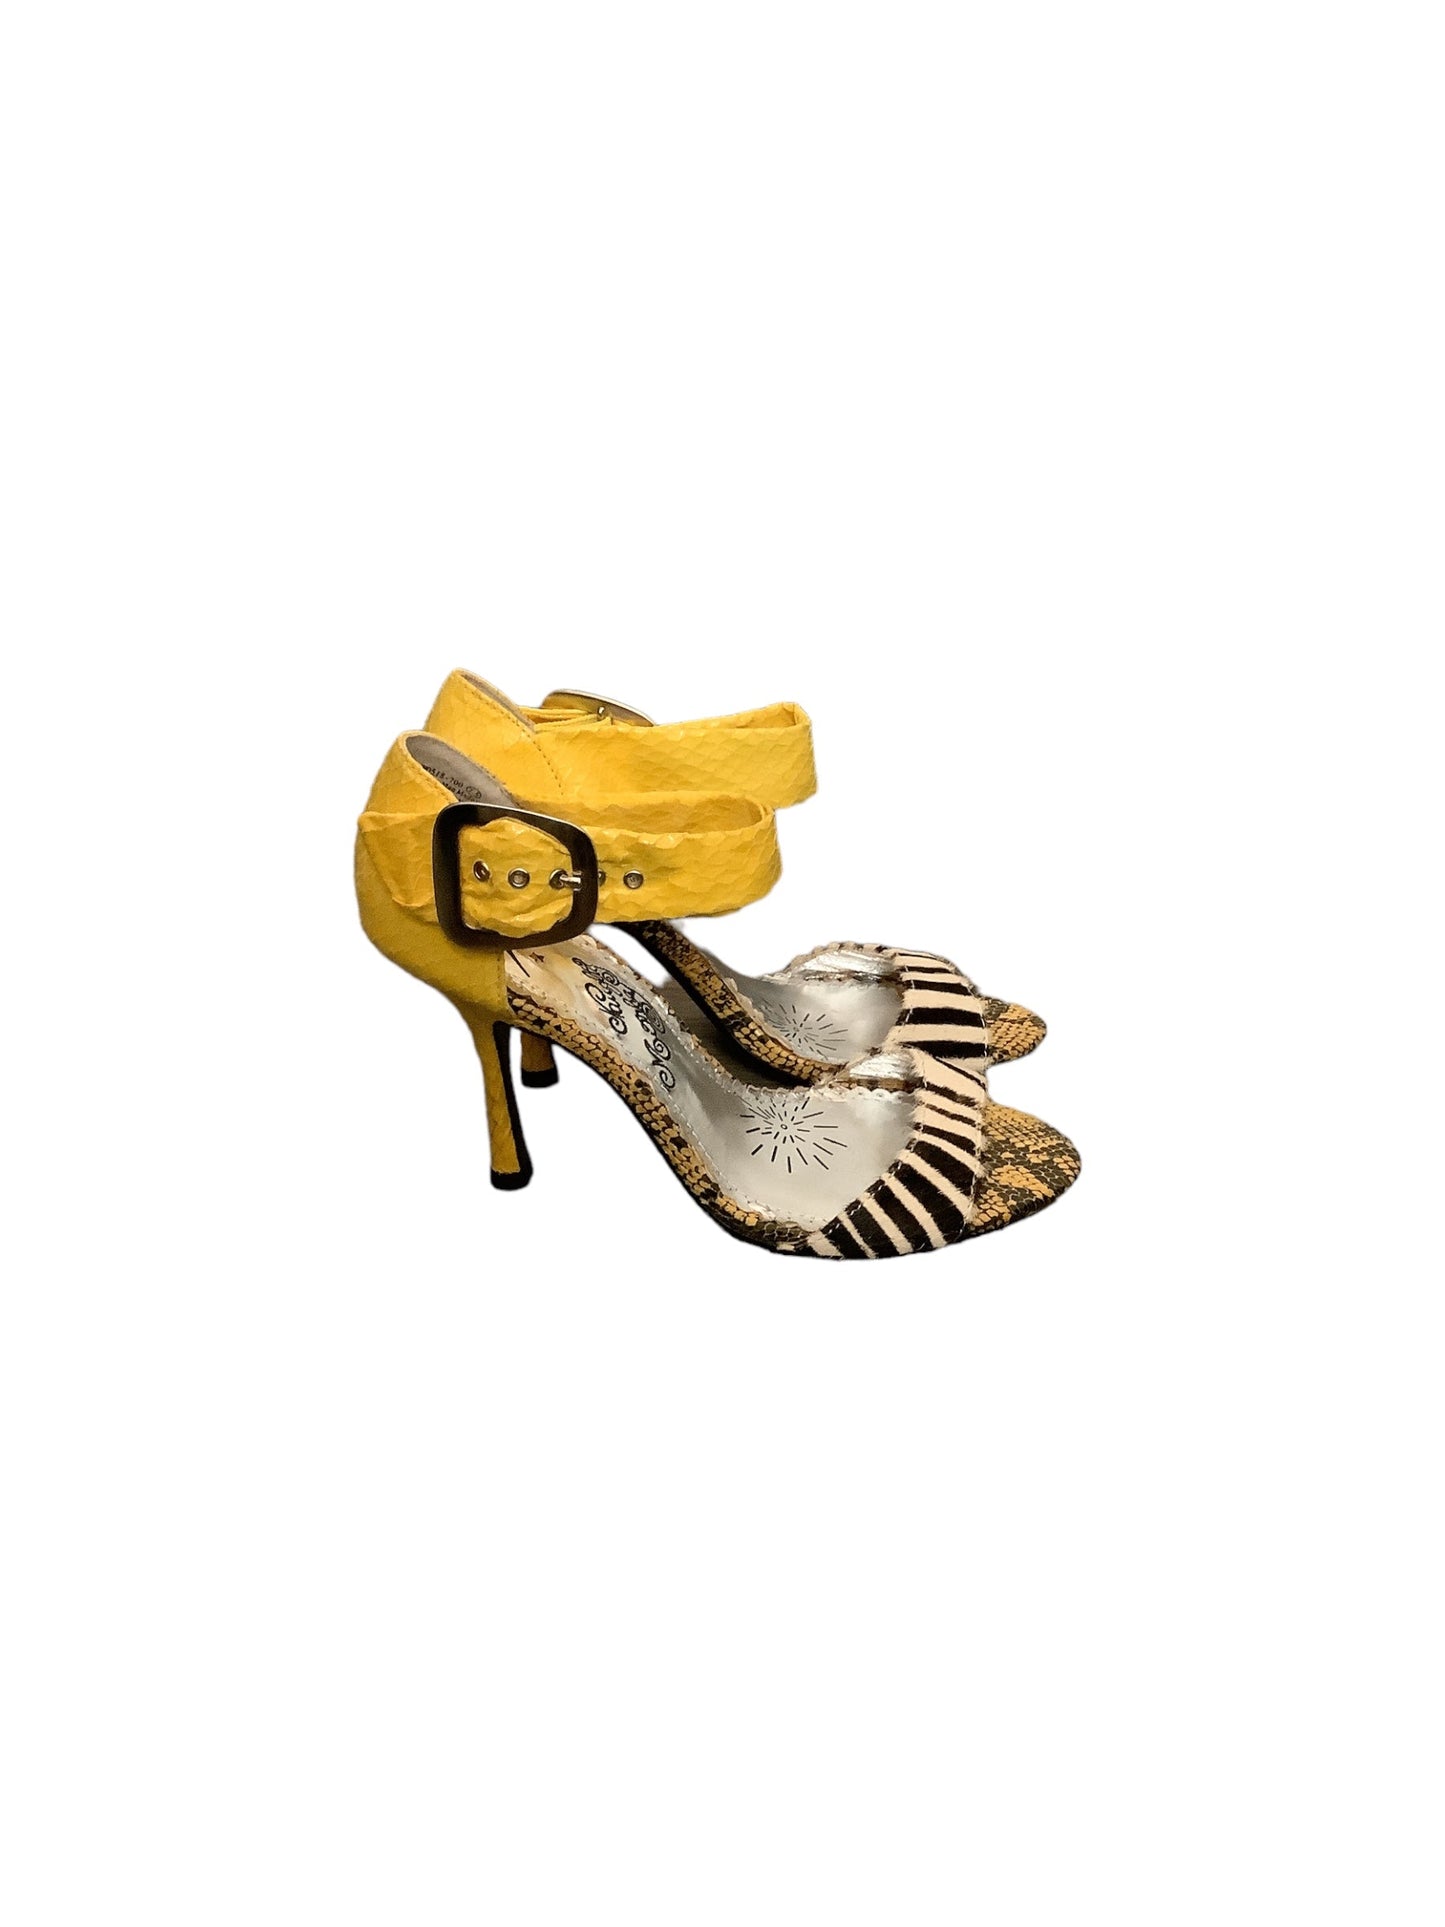 Yellow Shoes Heels Stiletto Naughty Monkey, Size 7.5